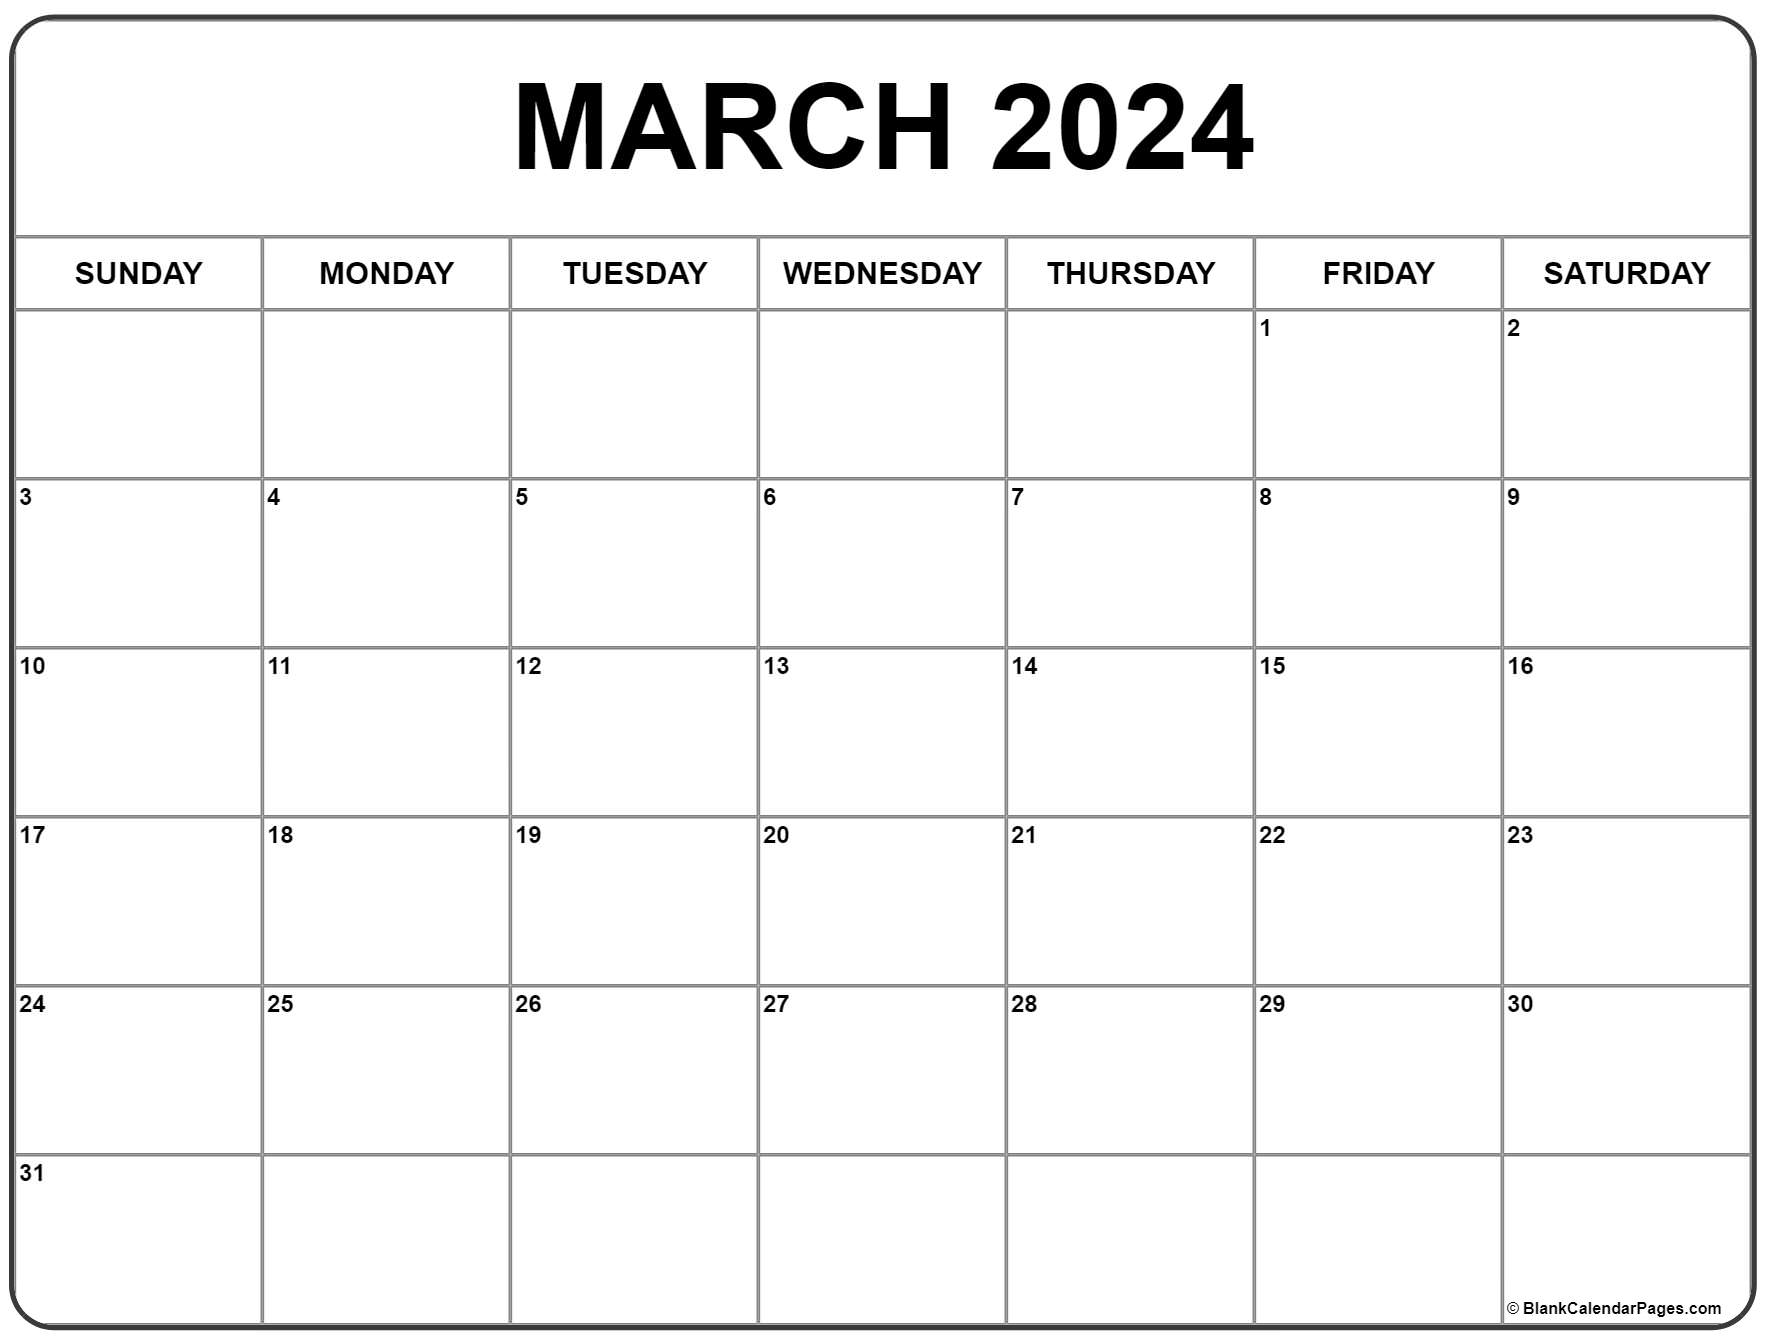 March 2024 Calendar | Free Printable Calendar for Printable Blank March 2024 Calendar